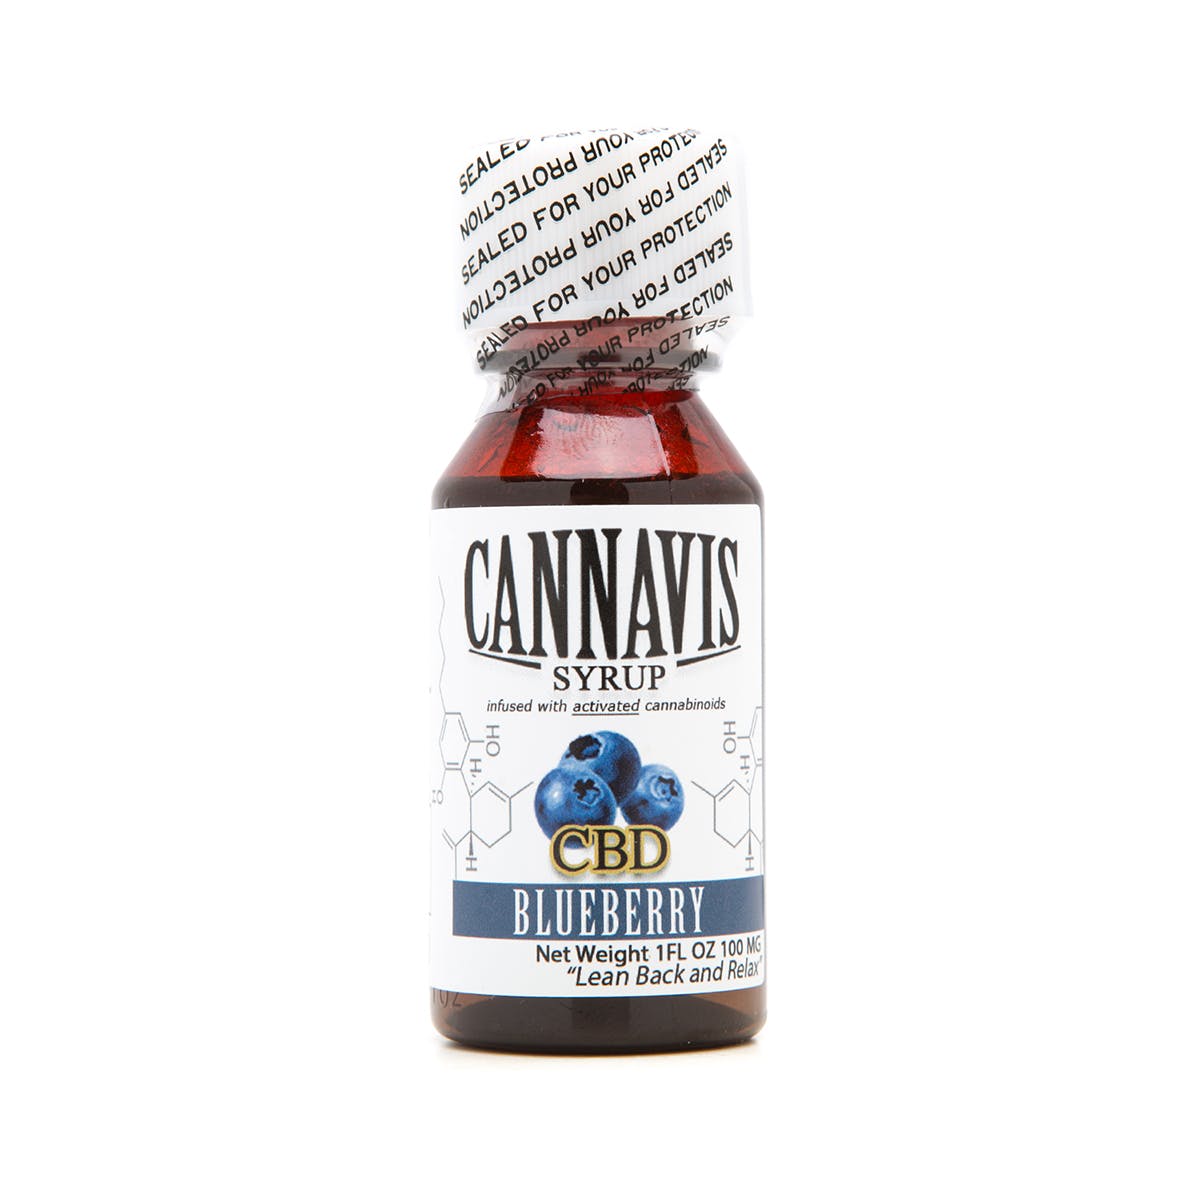 marijuana-dispensaries-true-central-20-cap-collective-in-los-angeles-cannavis-syrup-2c-cbd-blueberry-100mg